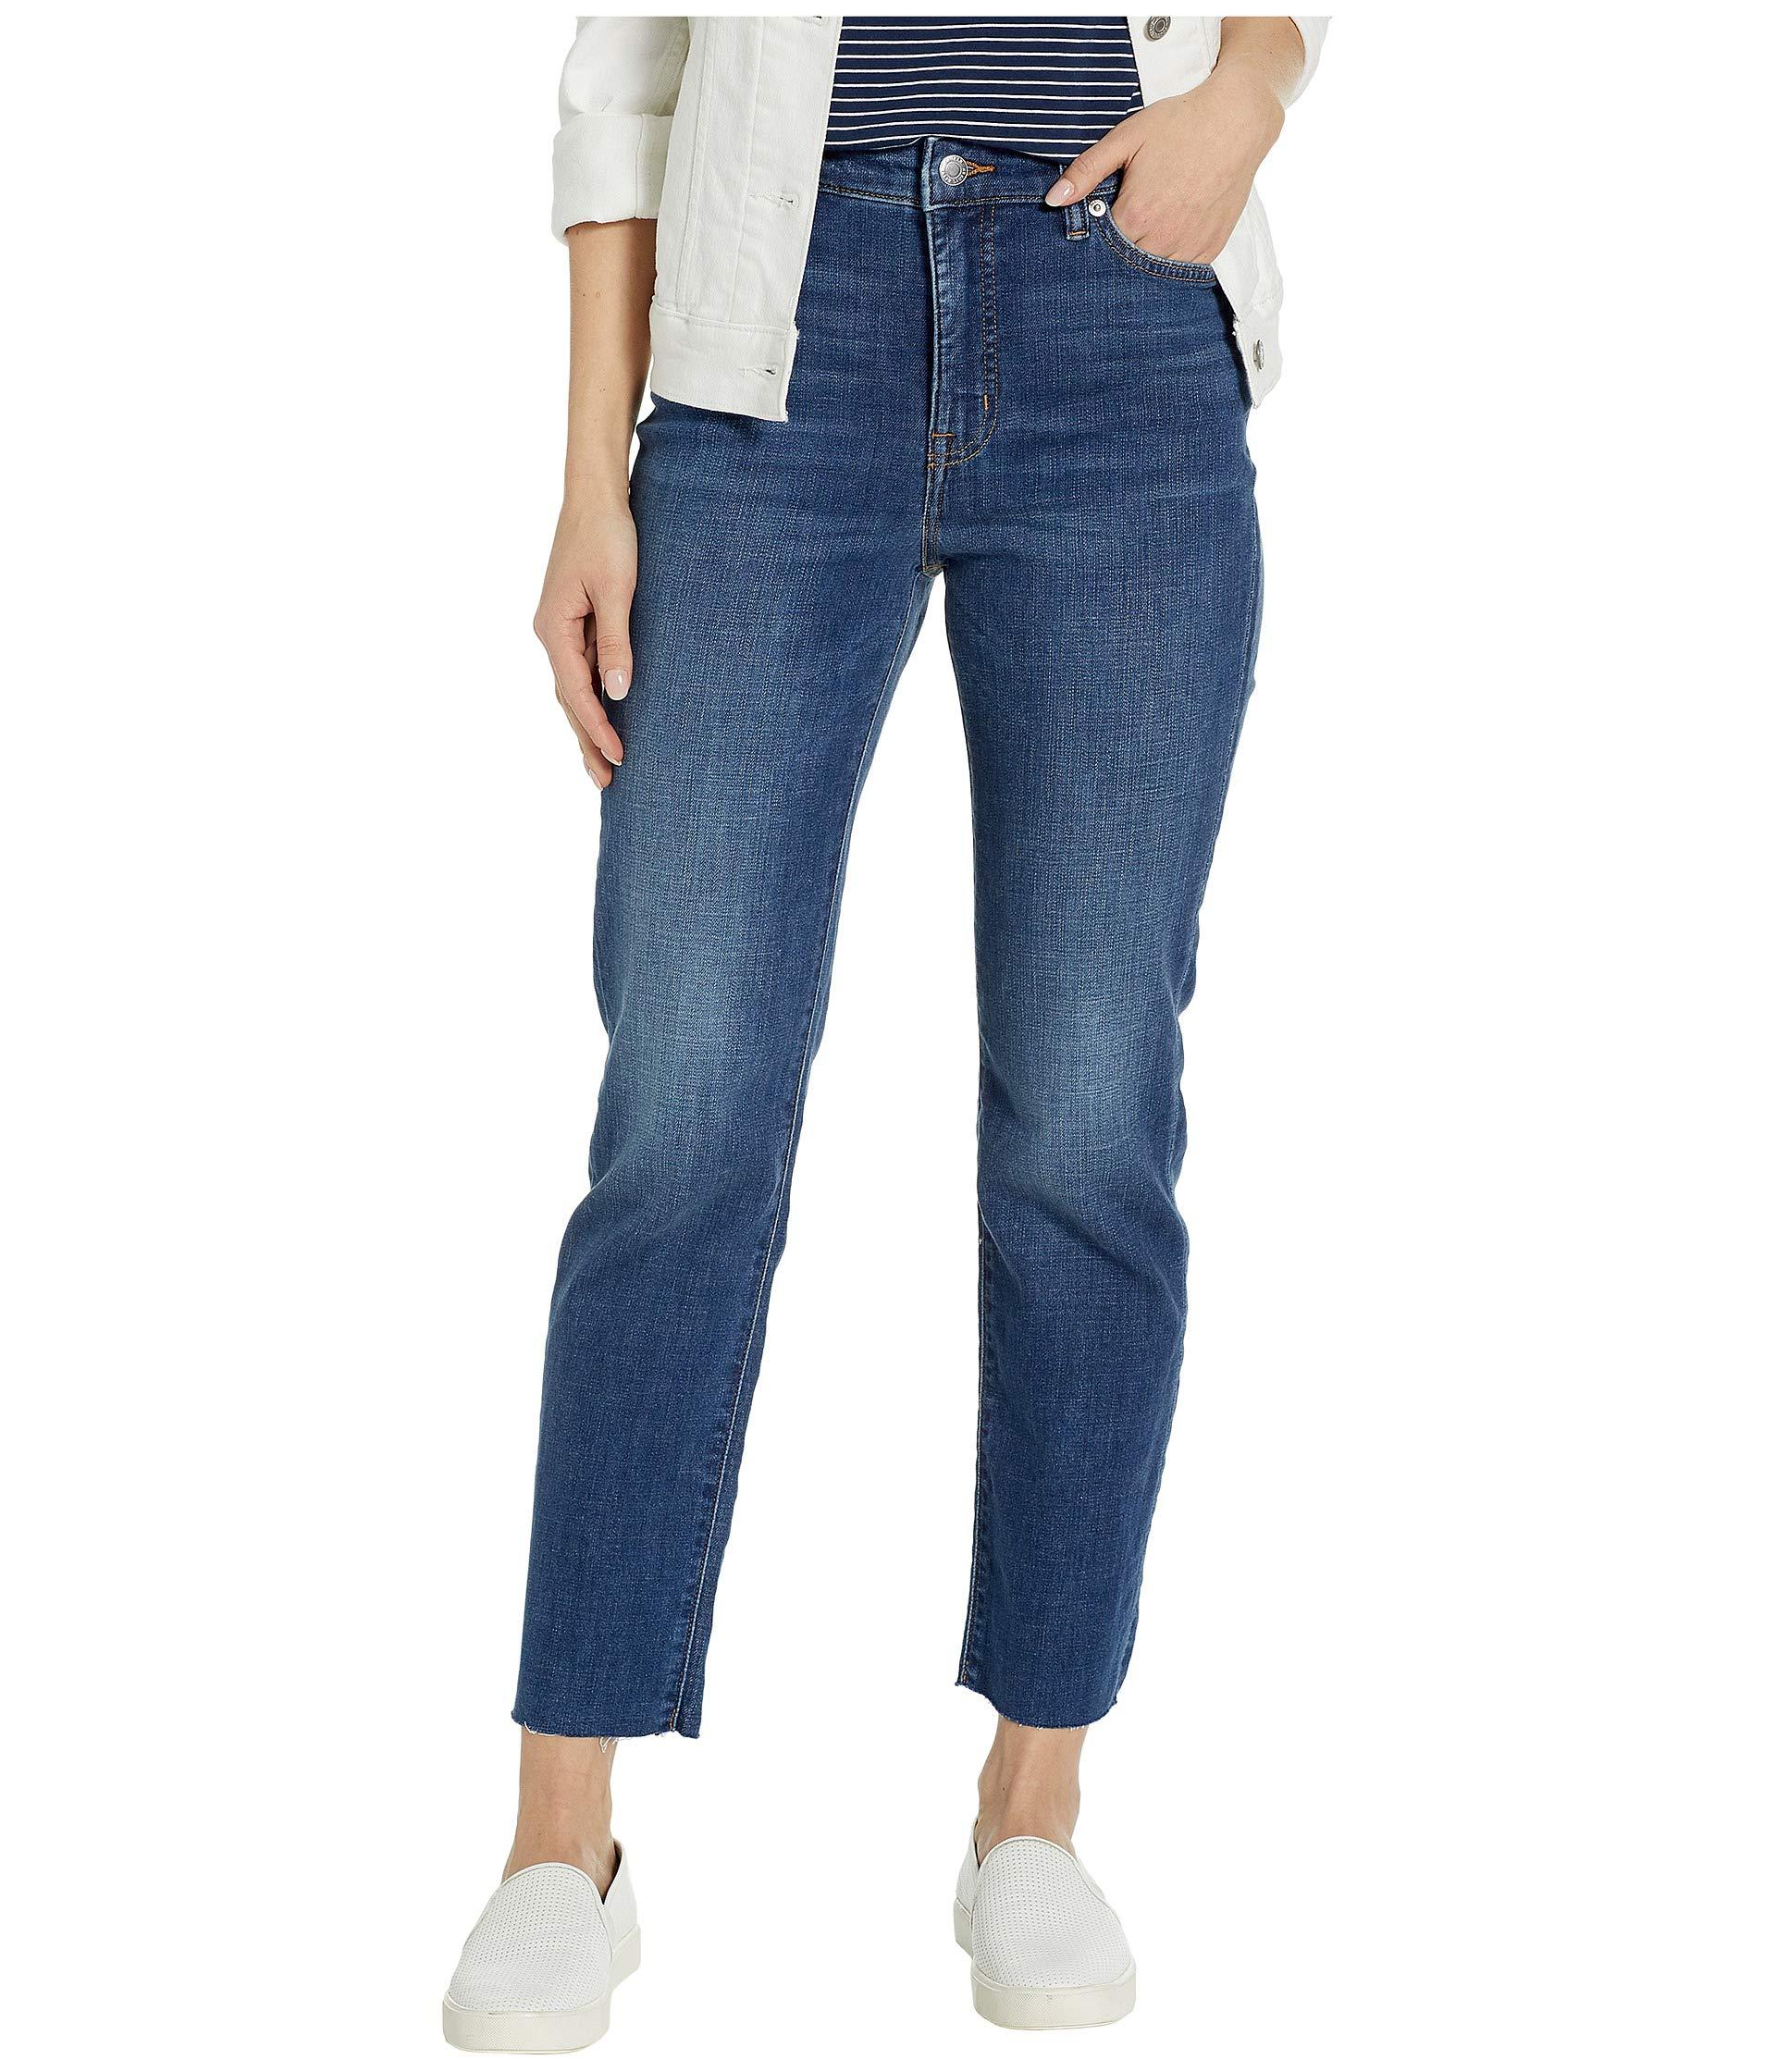 Lyst - Lauren by Ralph Lauren Regal Straight Ankle Jeans (light ...